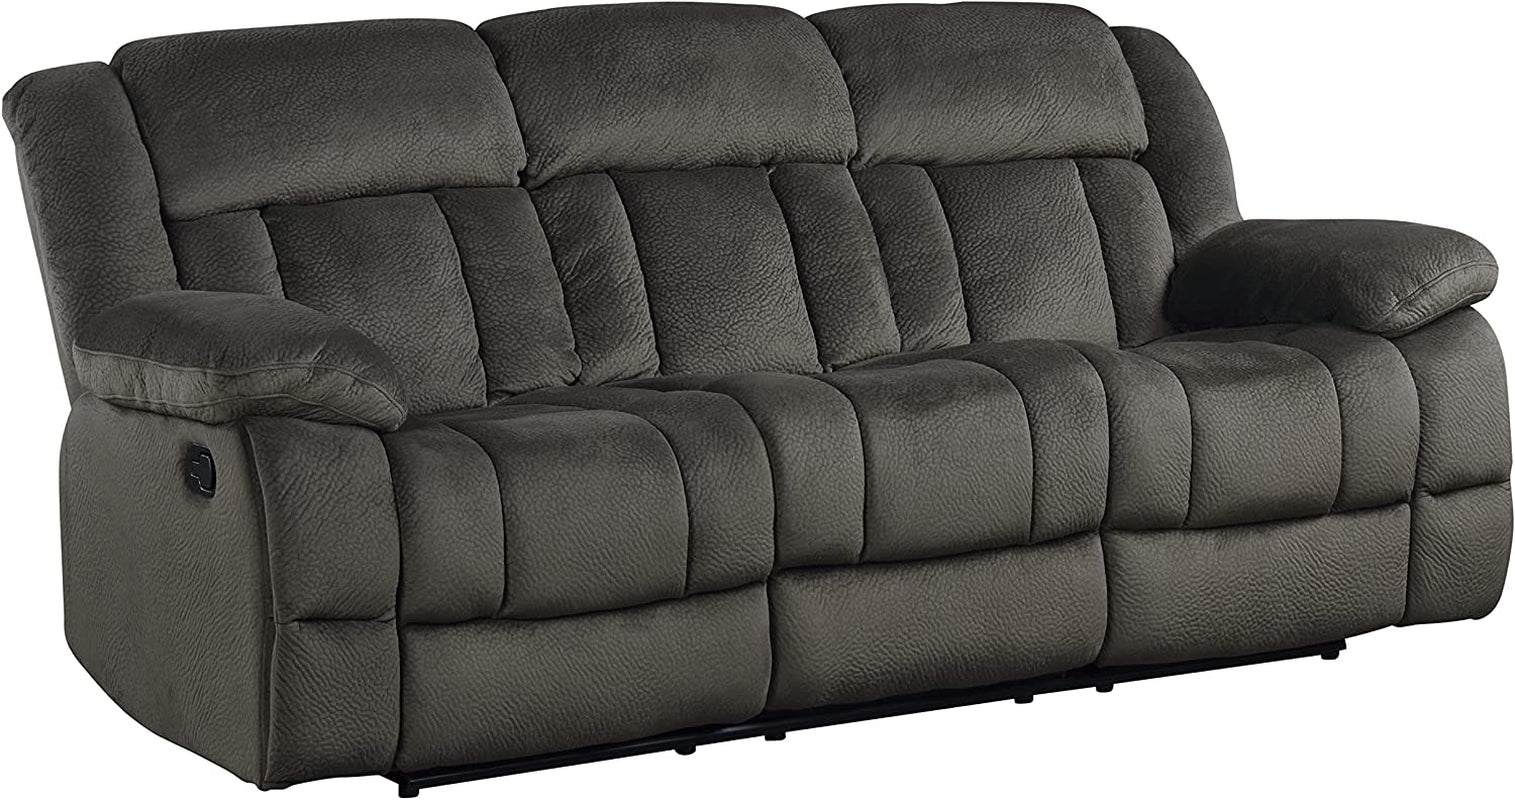 Double Reclining Sofa in Brown Microfiber Fabric